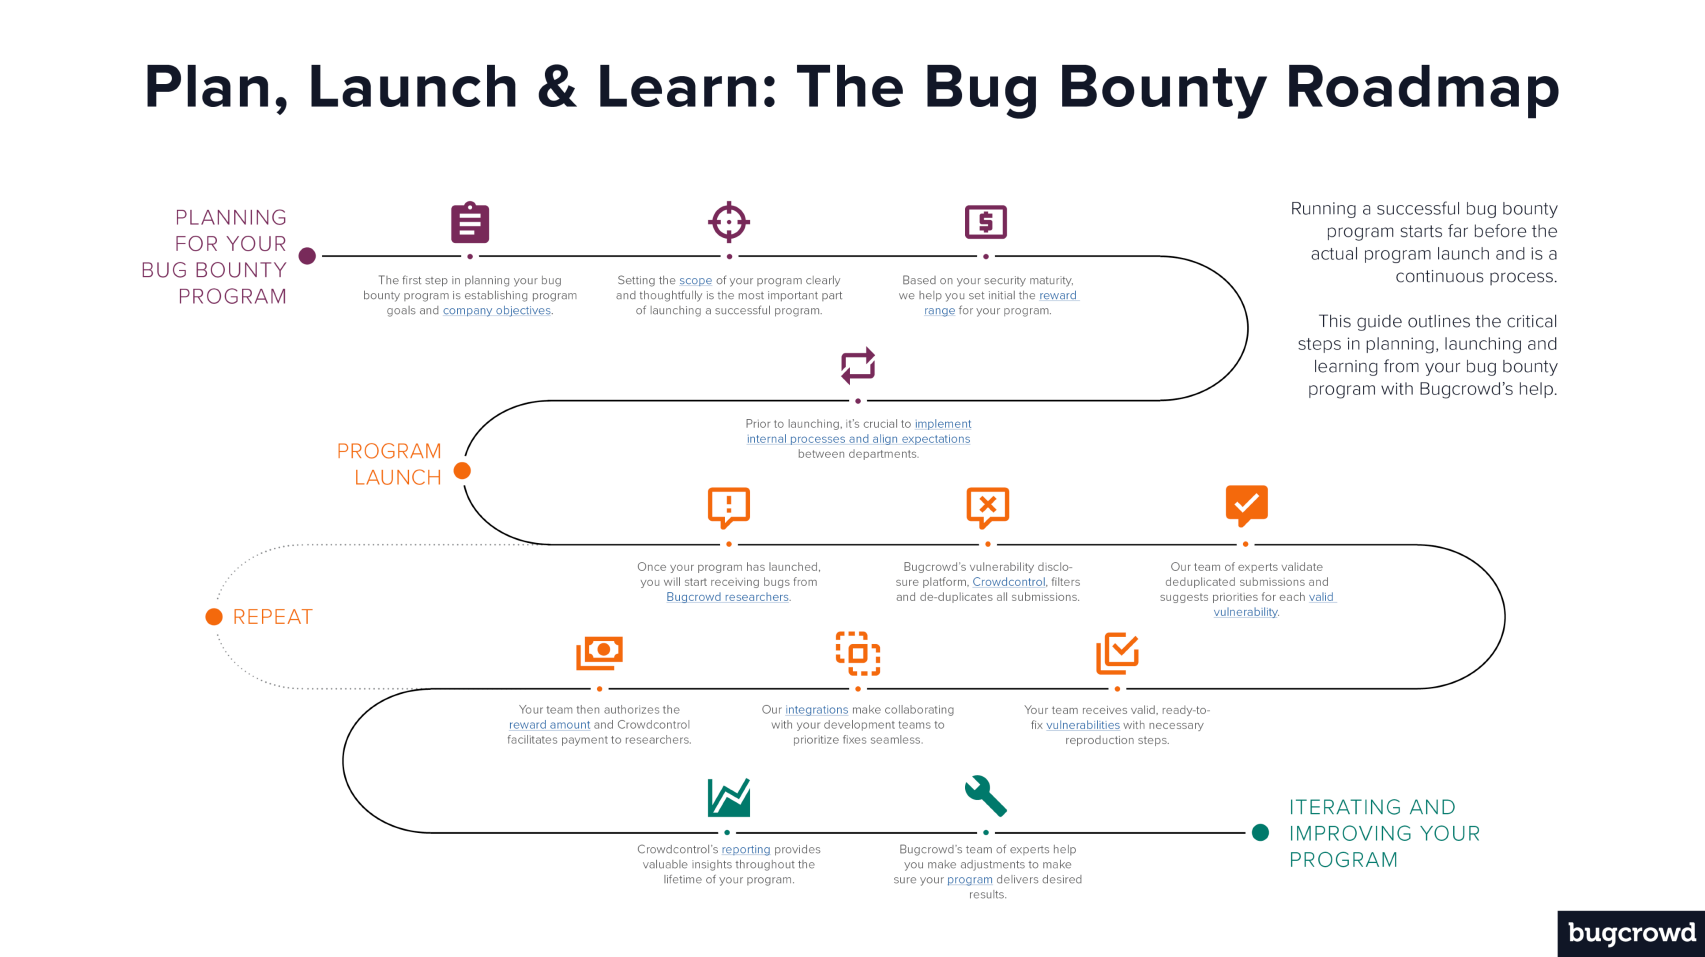 The Bug Bounty Roadmap